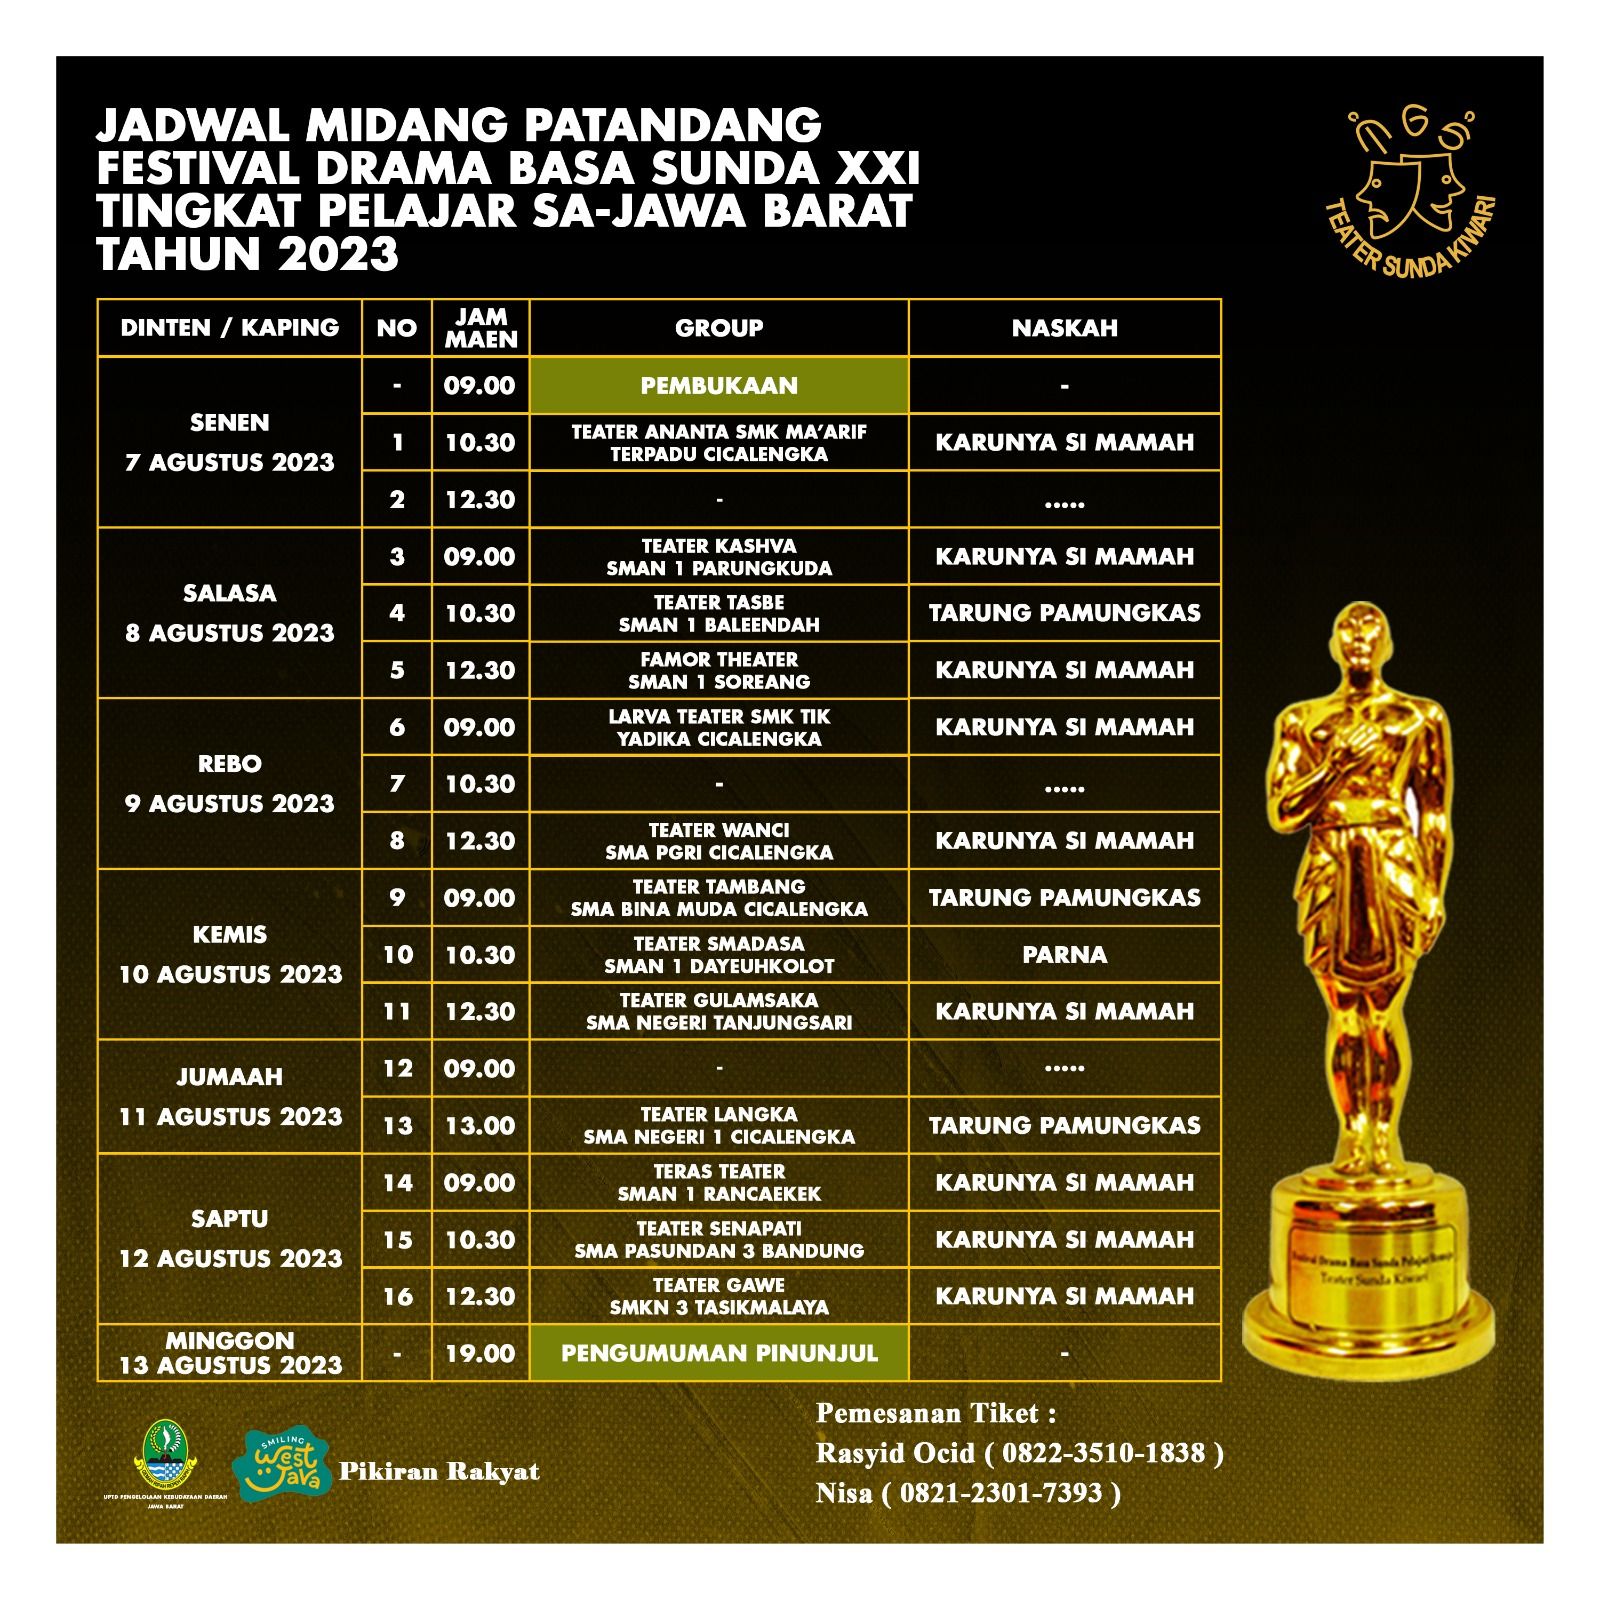 Jadwal midang para patandang Festival Drama Basa Sunda XXI tingkat Pelajar sa-Jawa Barat.*   